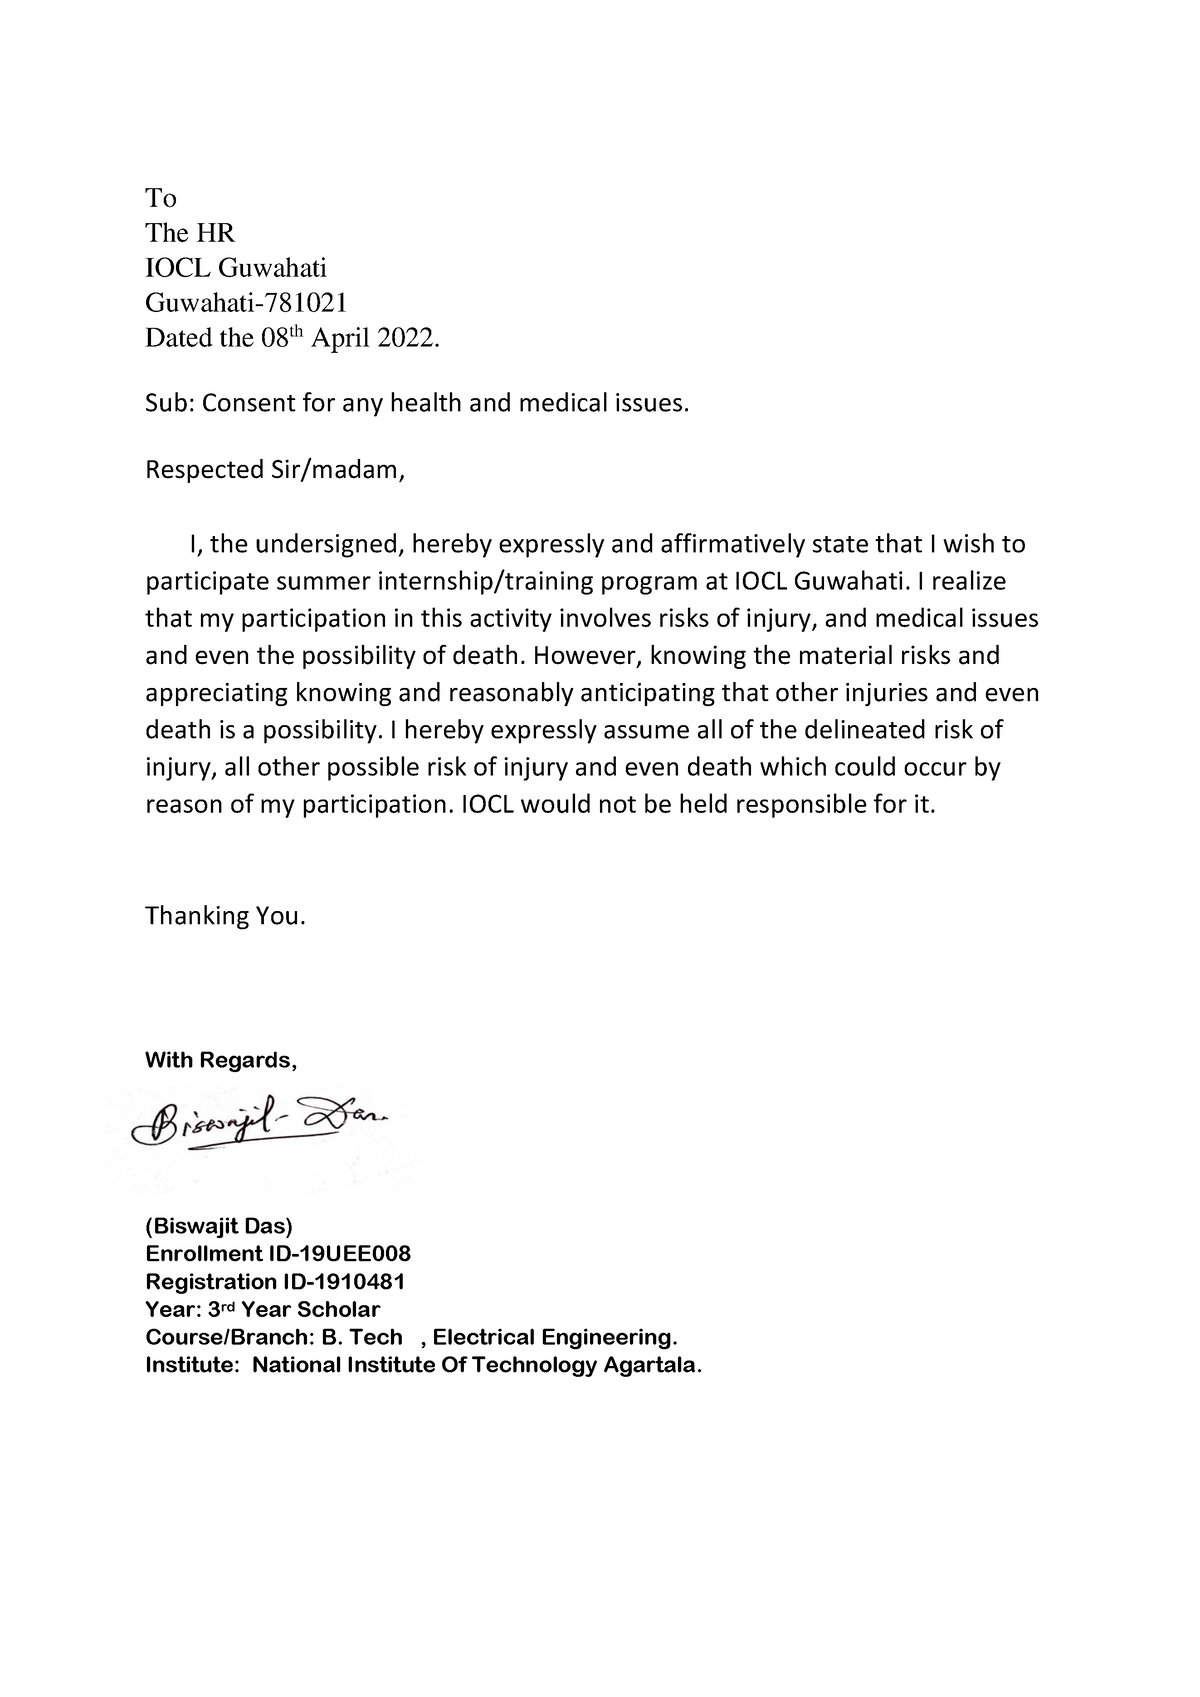 Consent letter Biswajit Das - To The HR IOCL Guwahati Guwahati- Dated ...